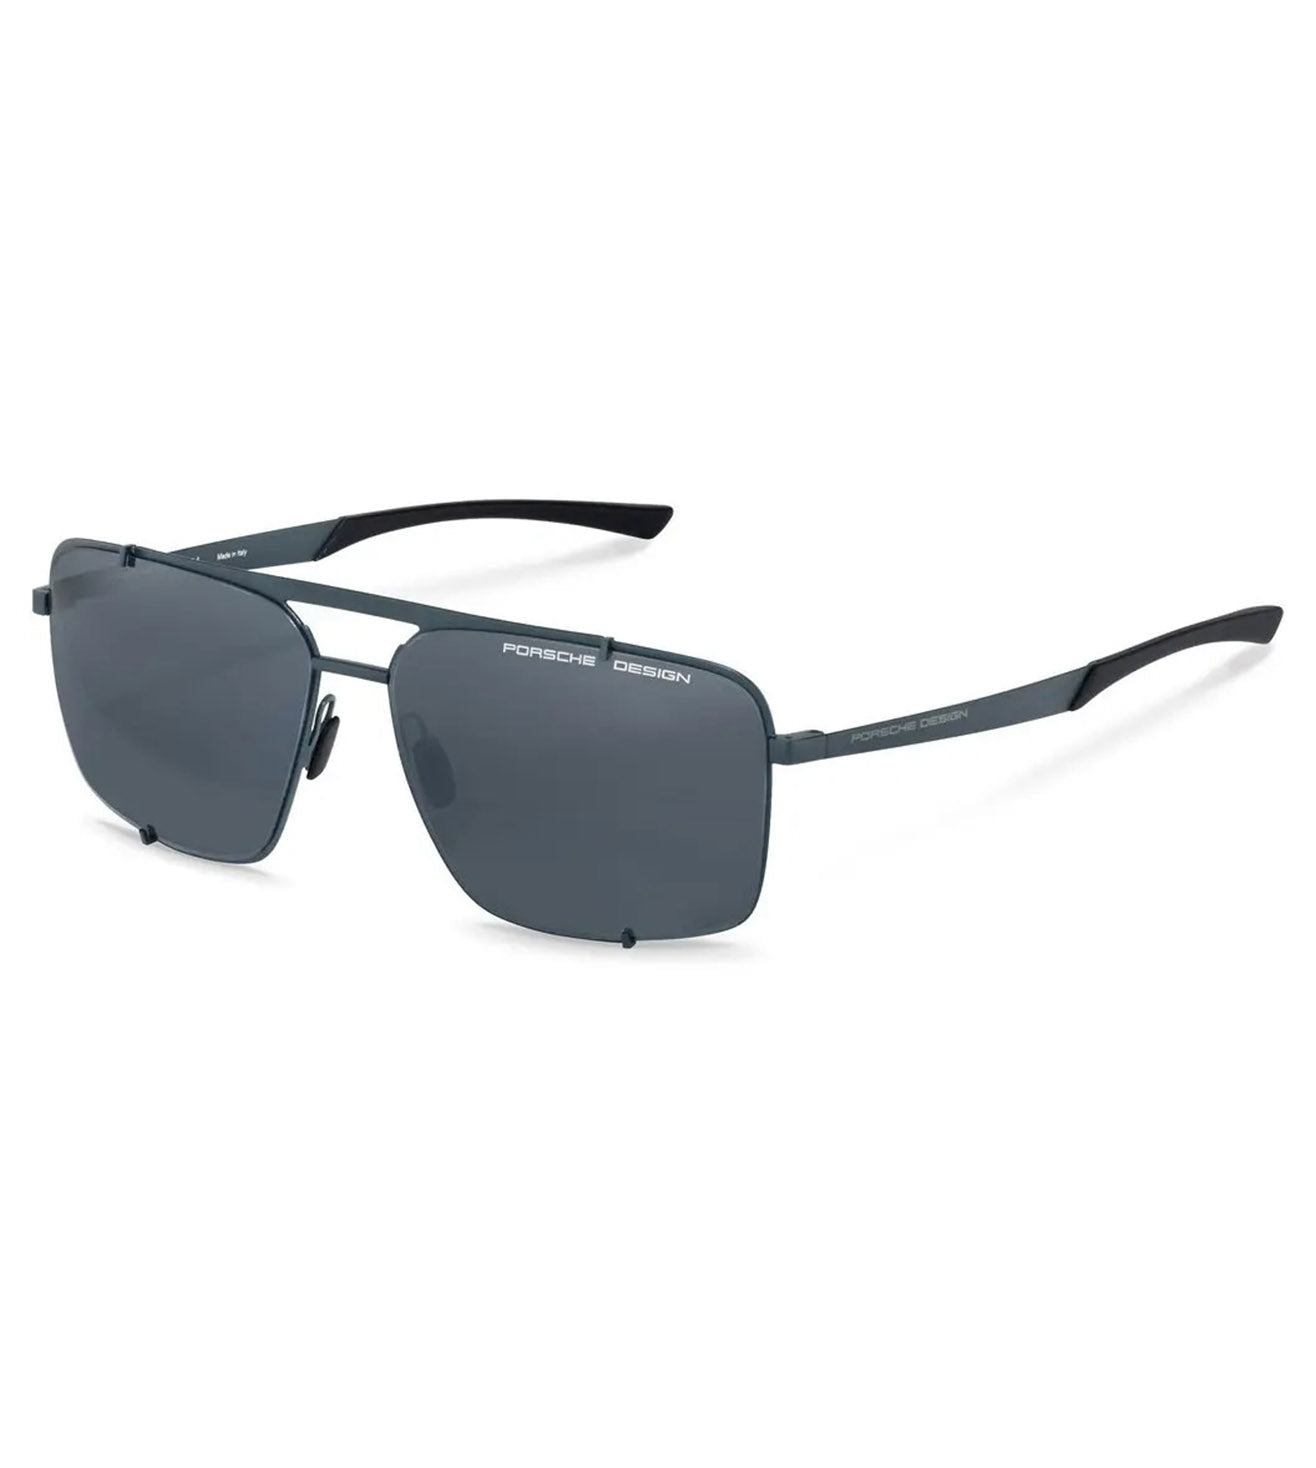 Porsche Design Men's Blue/Black-Mirrored Aviator Sunglasses